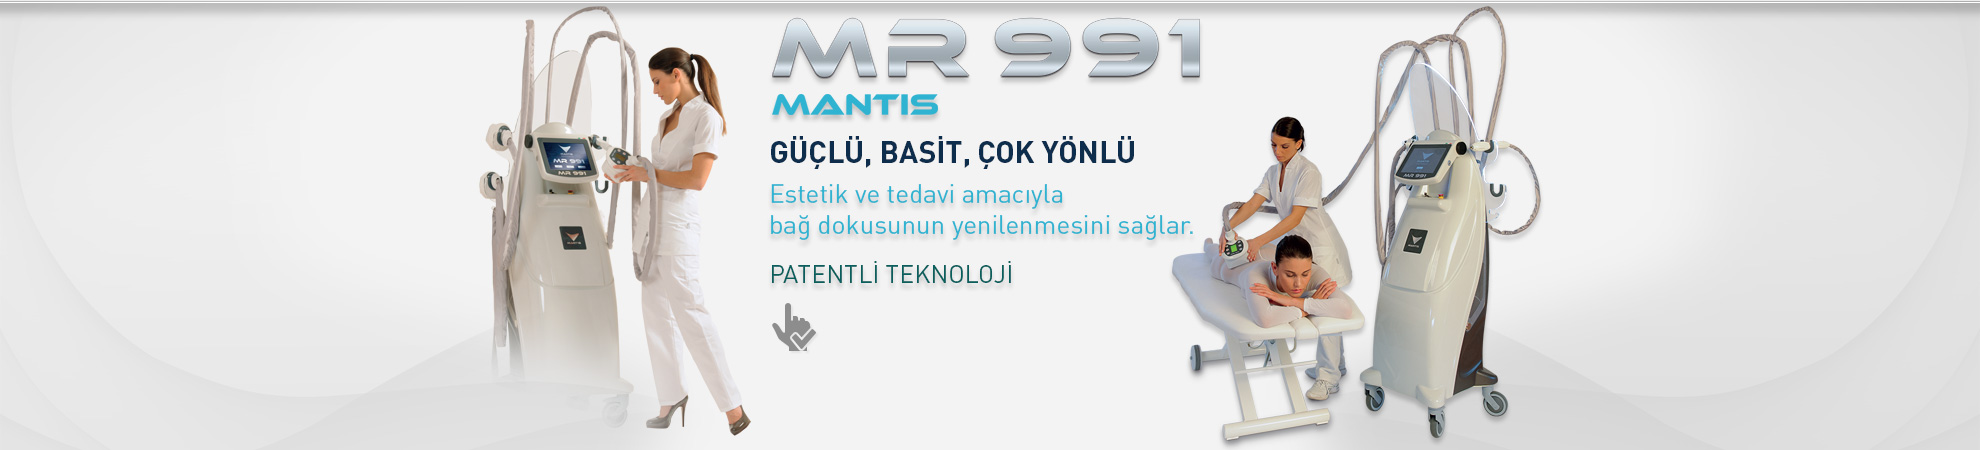 mantis-mr991